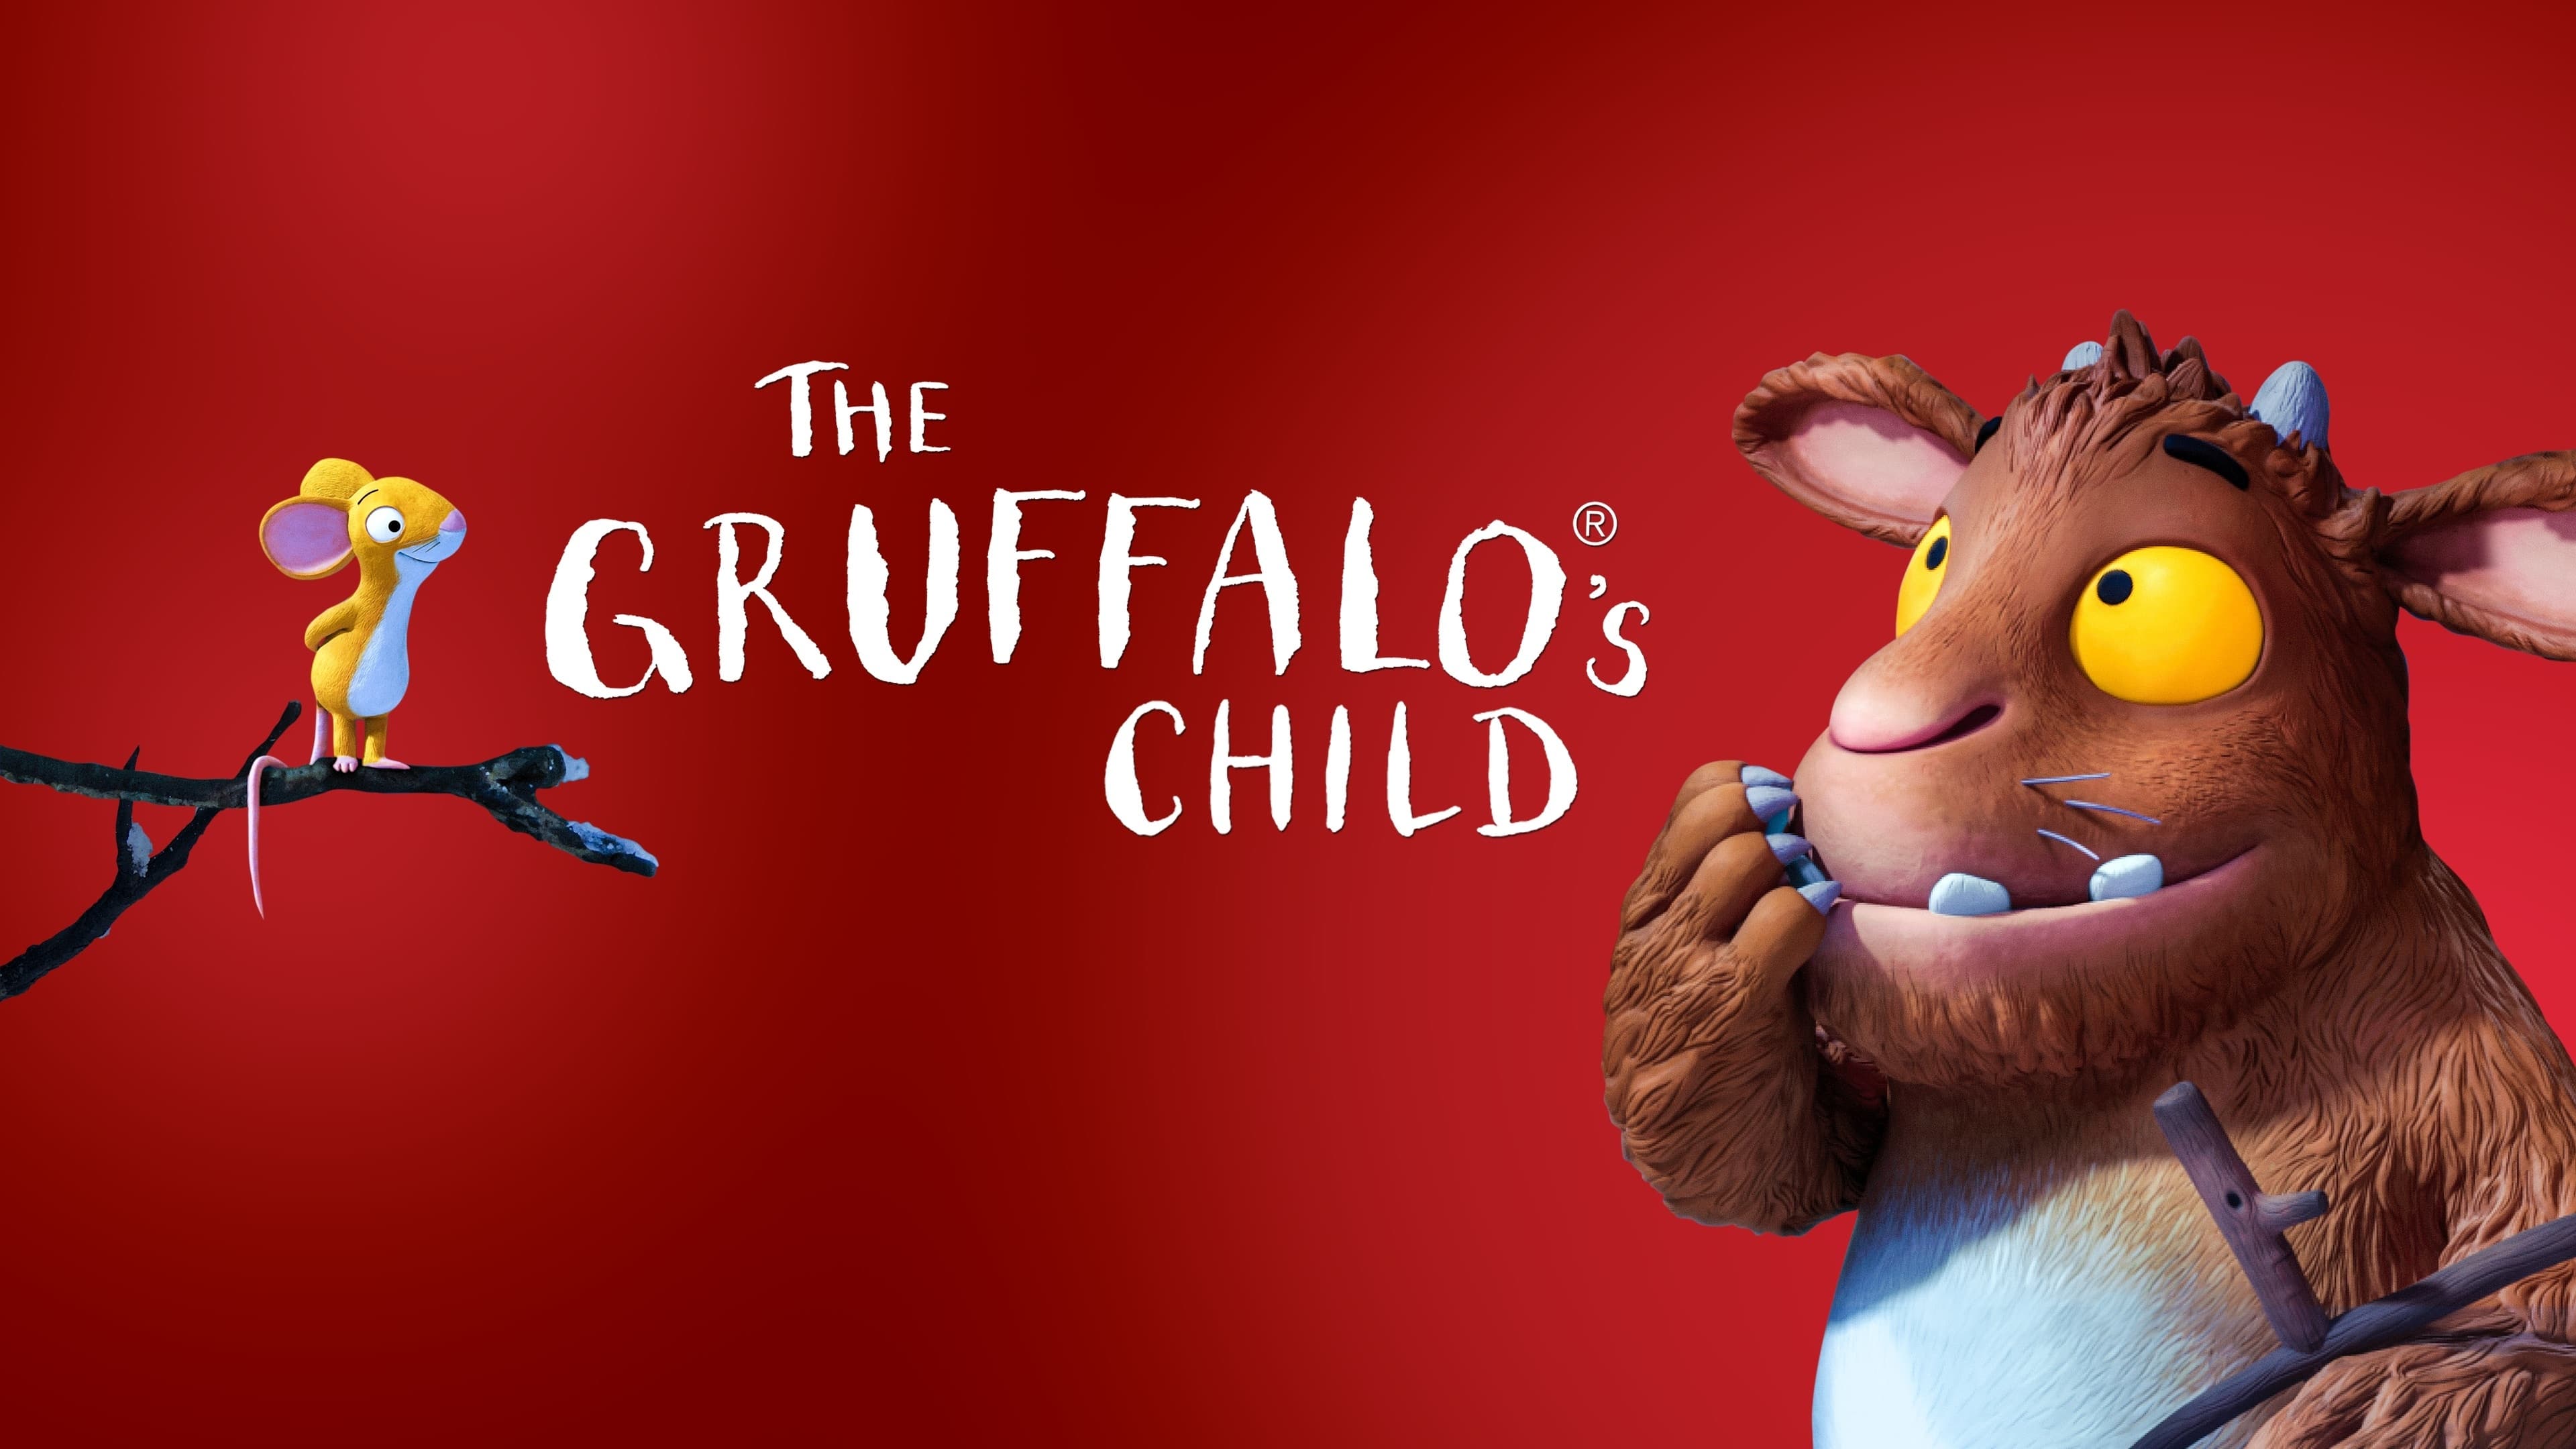 The Gruffalo's Child (2011)